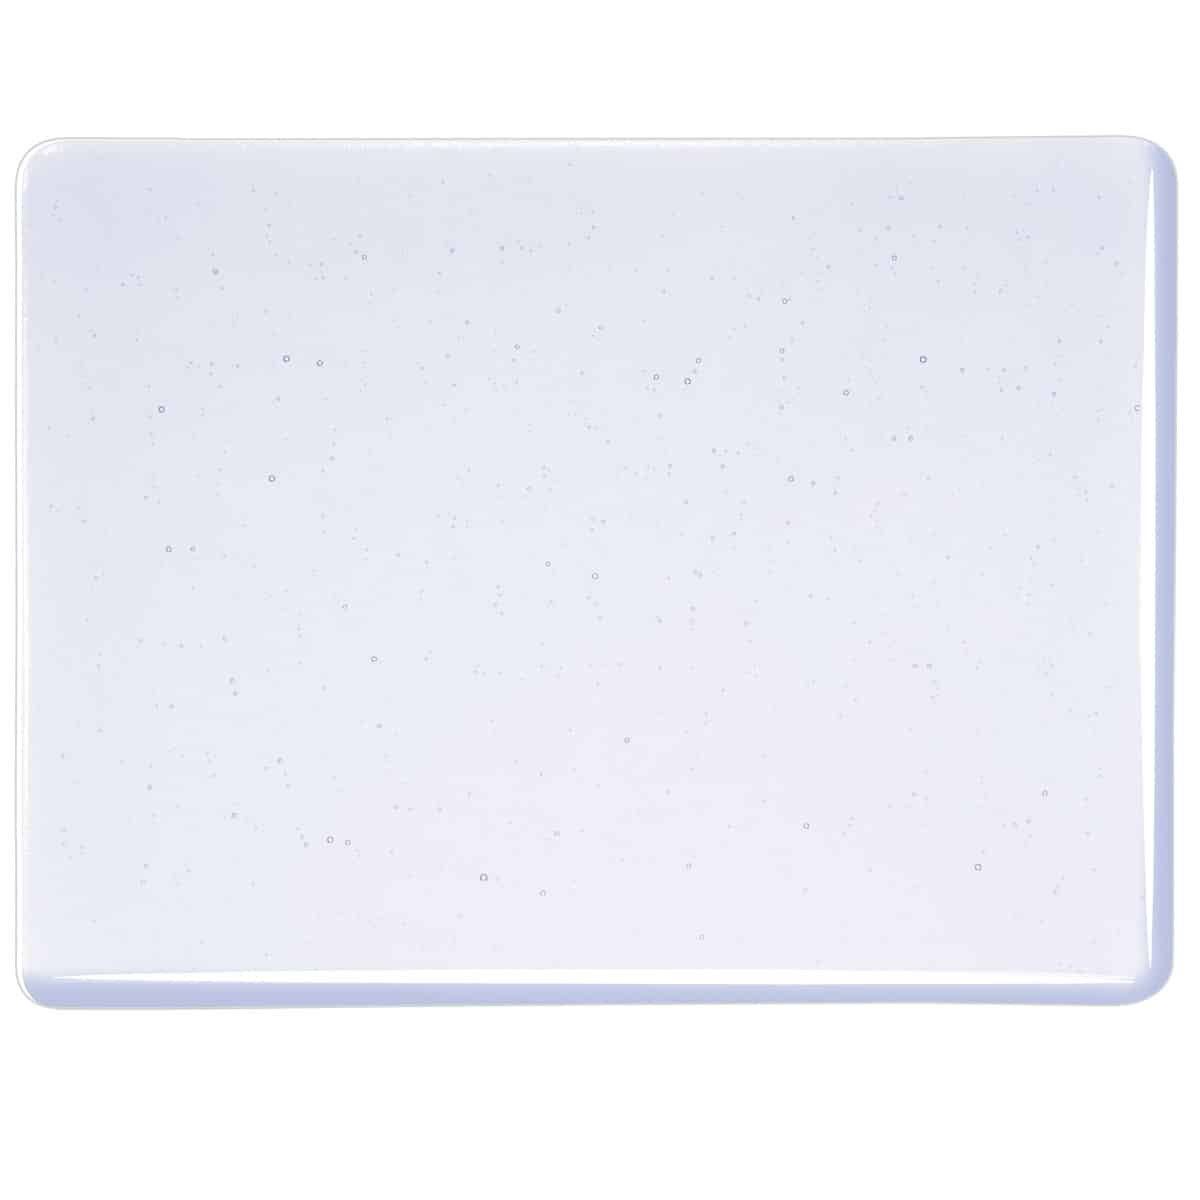 001842 Light Neo Lavender Shift Tint transparent sheet glass swatch